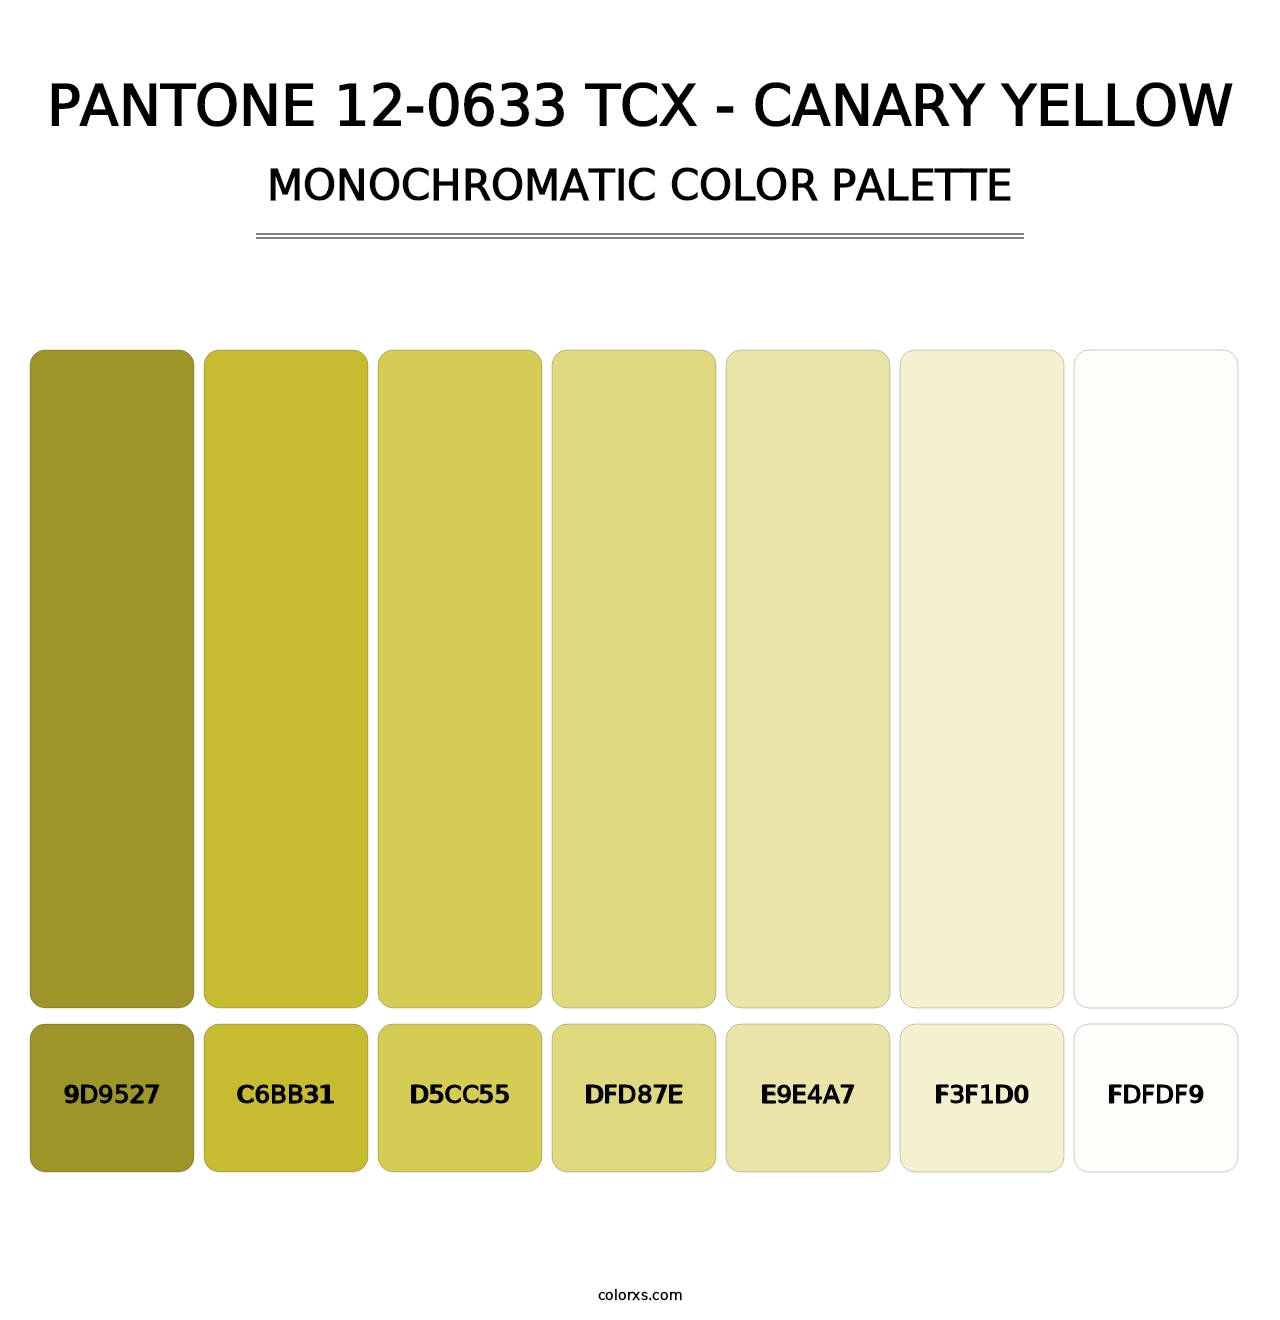 PANTONE 12-0633 TCX - Canary Yellow - Monochromatic Color Palette